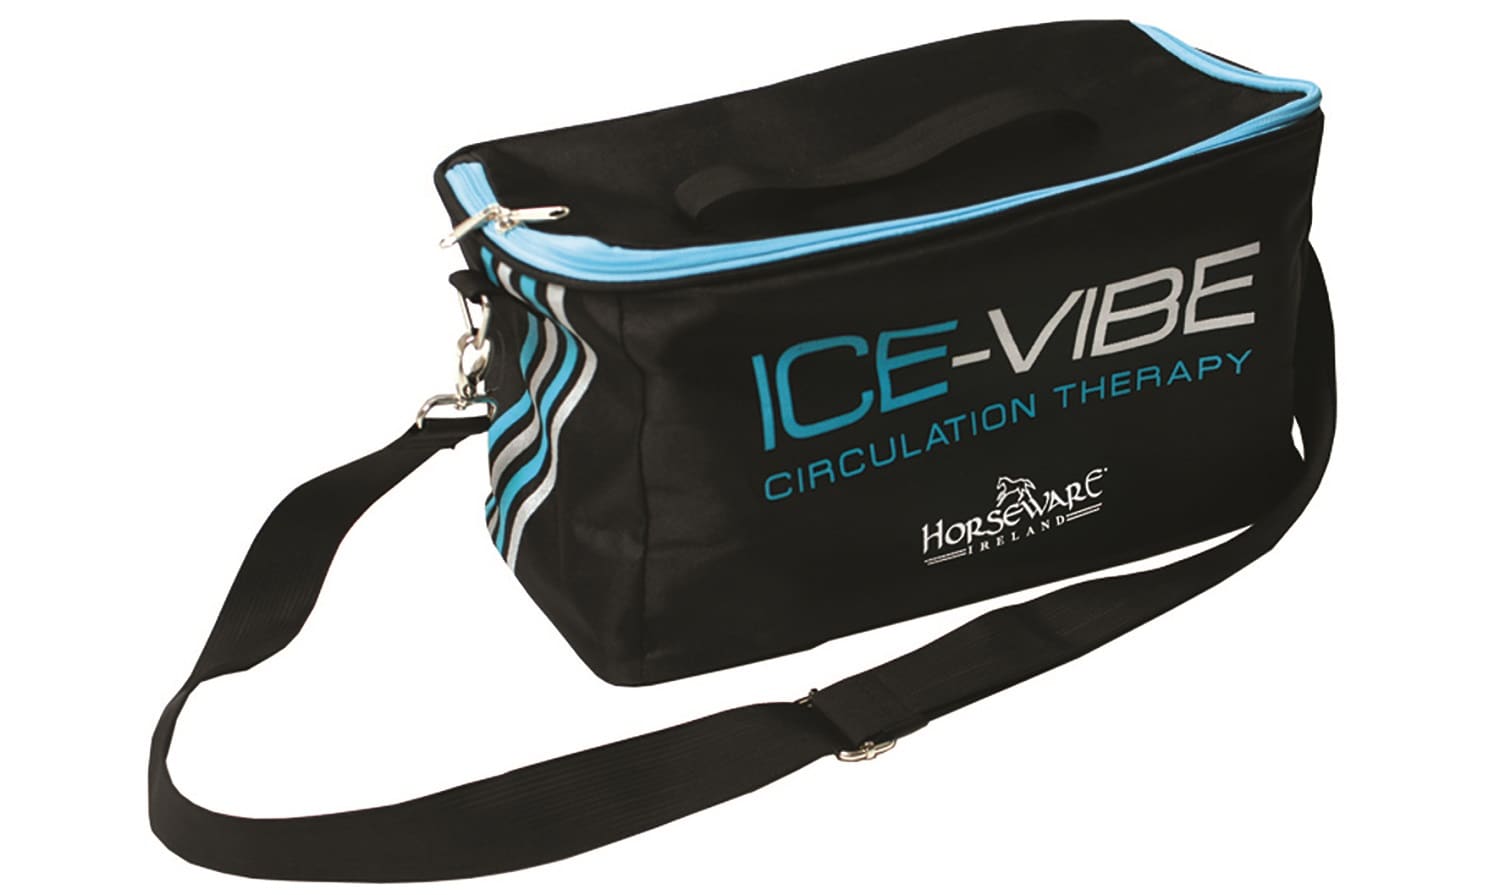 Horseware Ice-Vibe kylmälaukku